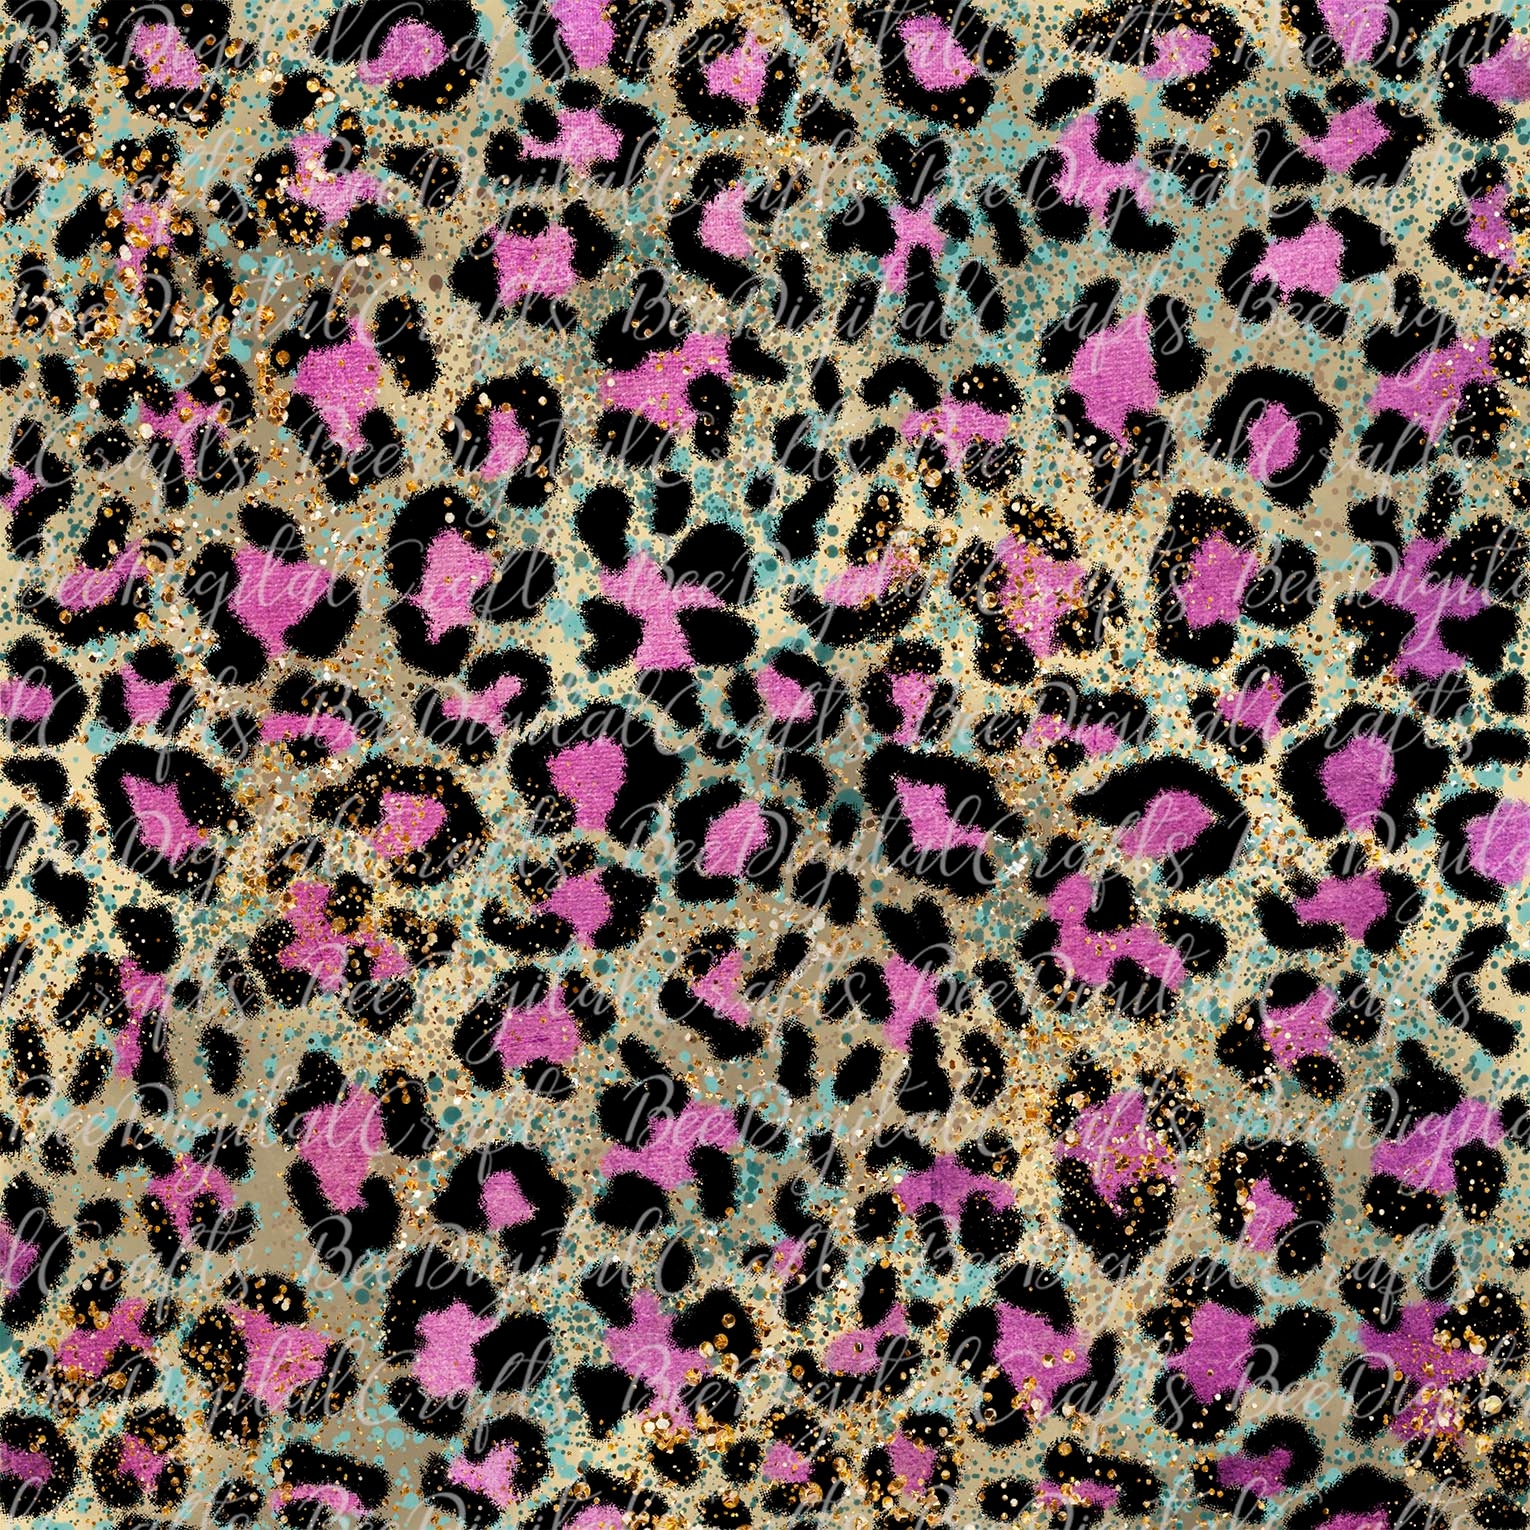 Digital leopard background Hand drawn cheetah download | Etsy